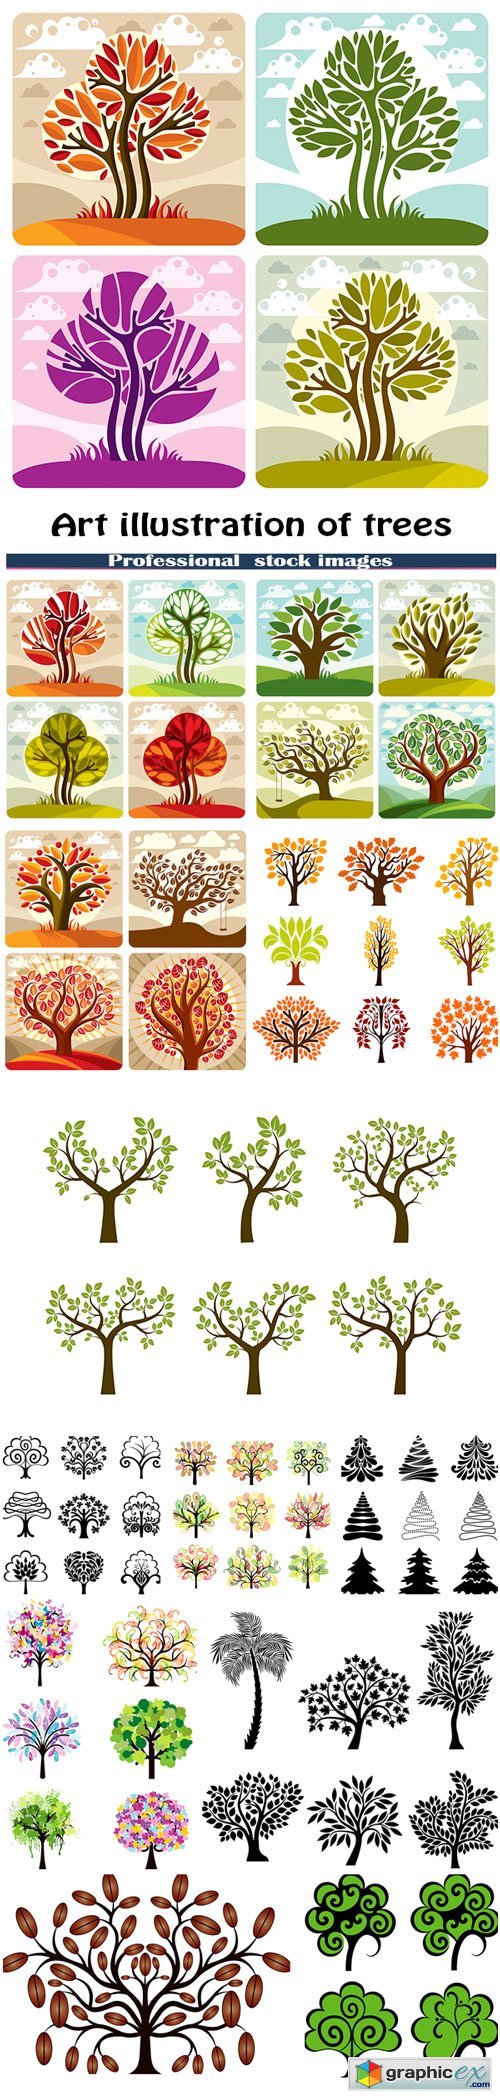 Art illustration of trees